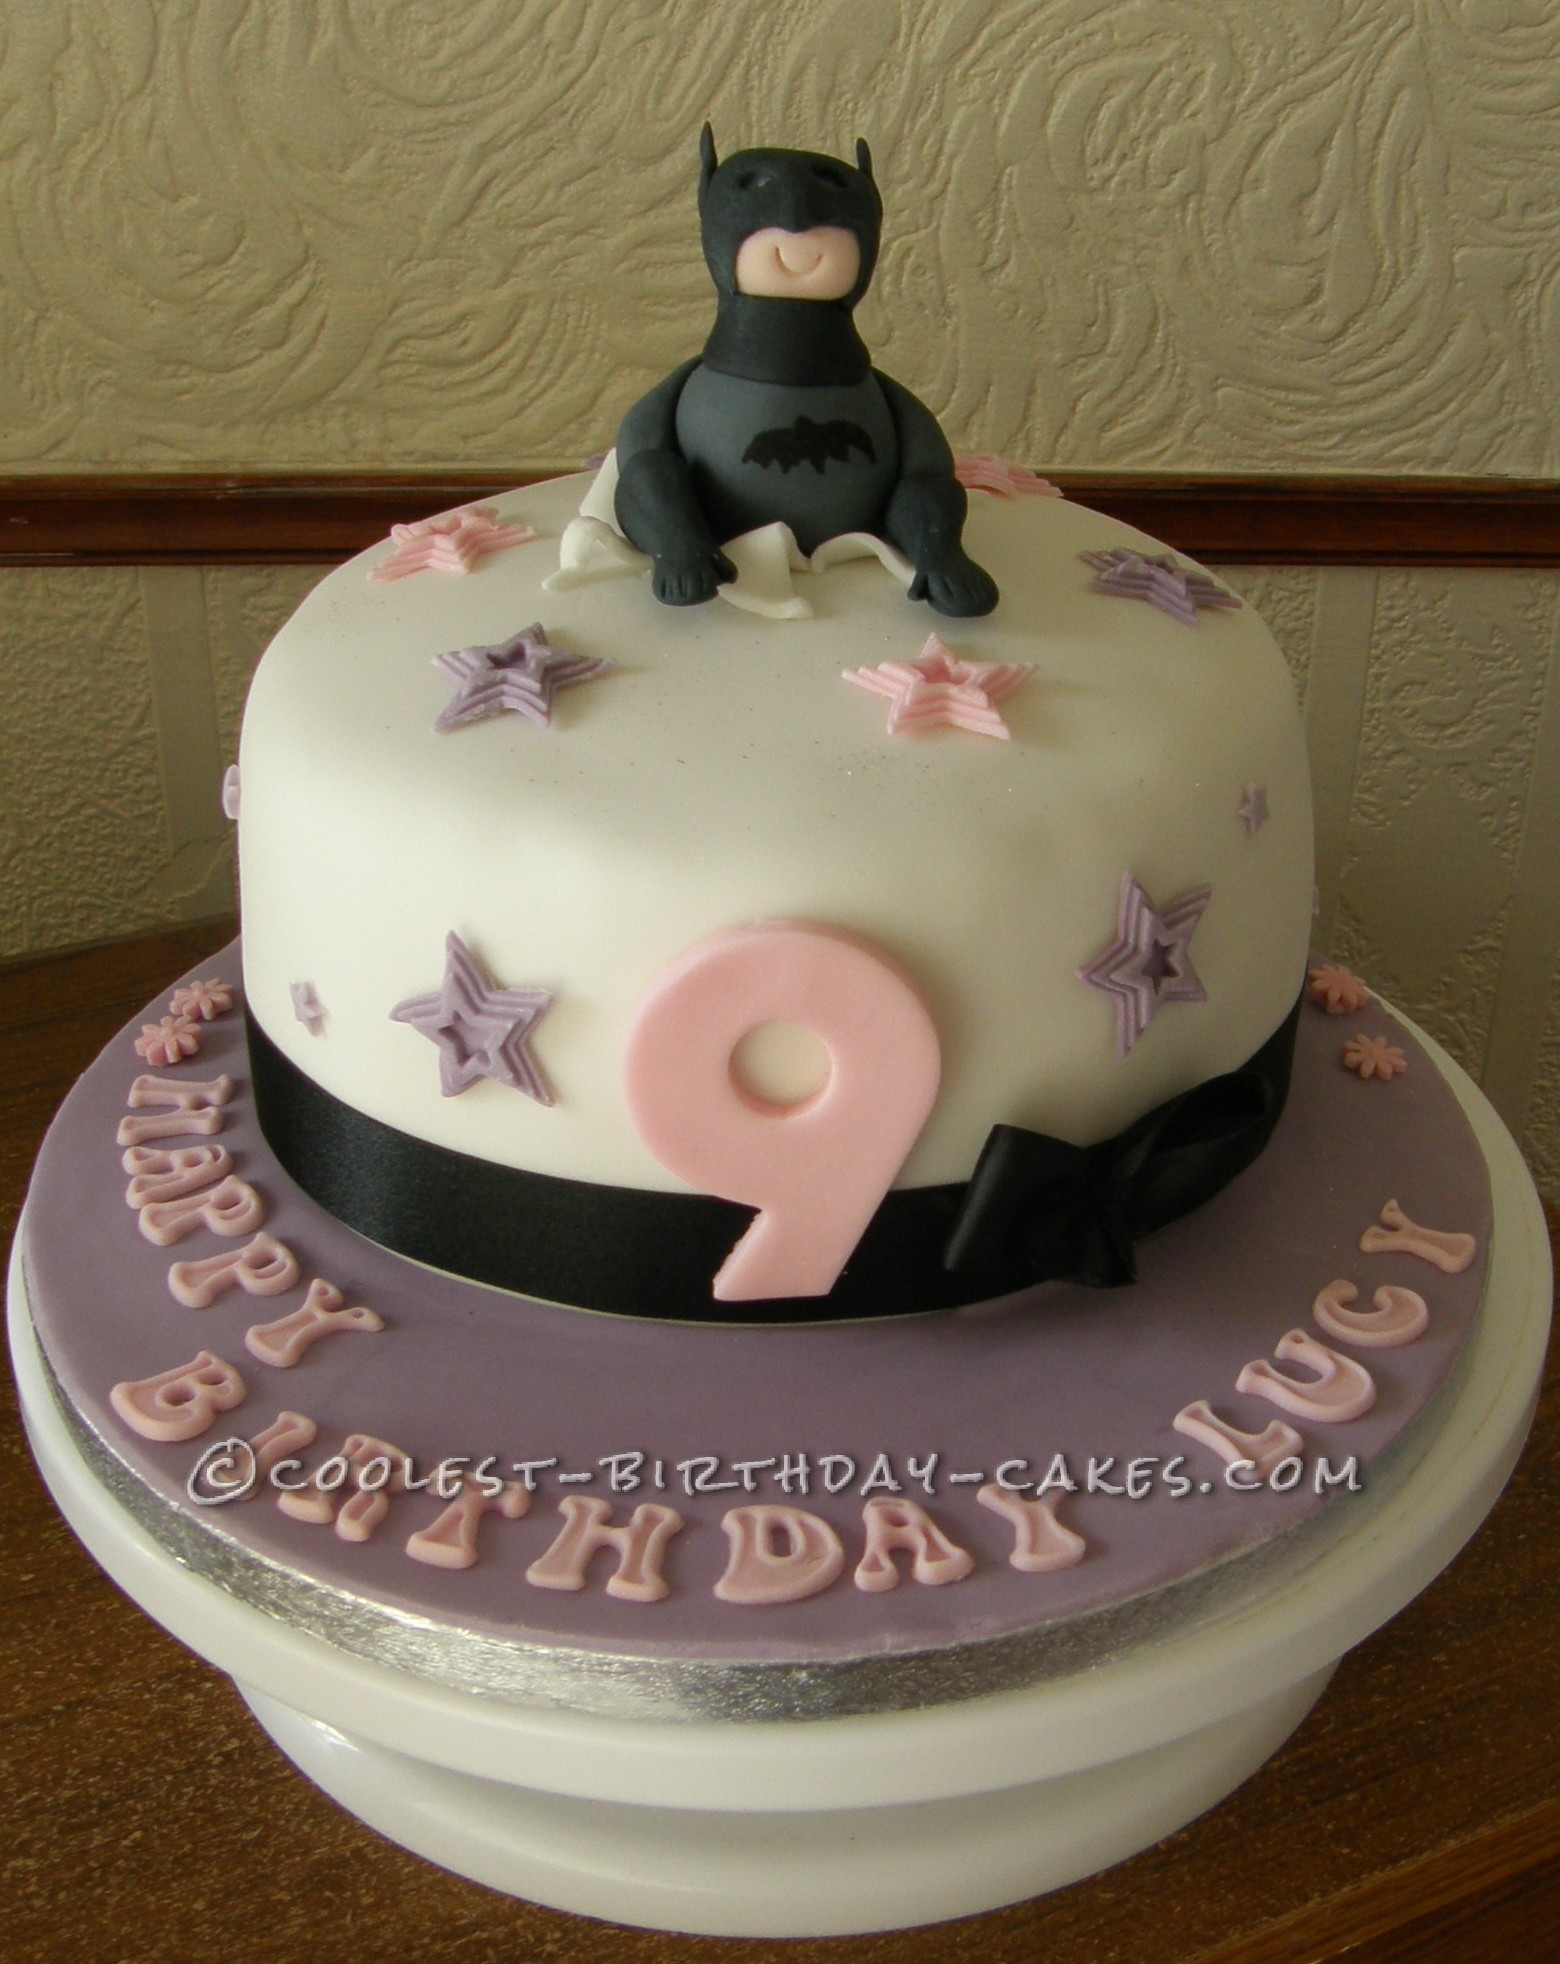 Coolest Batman Birthday Cake